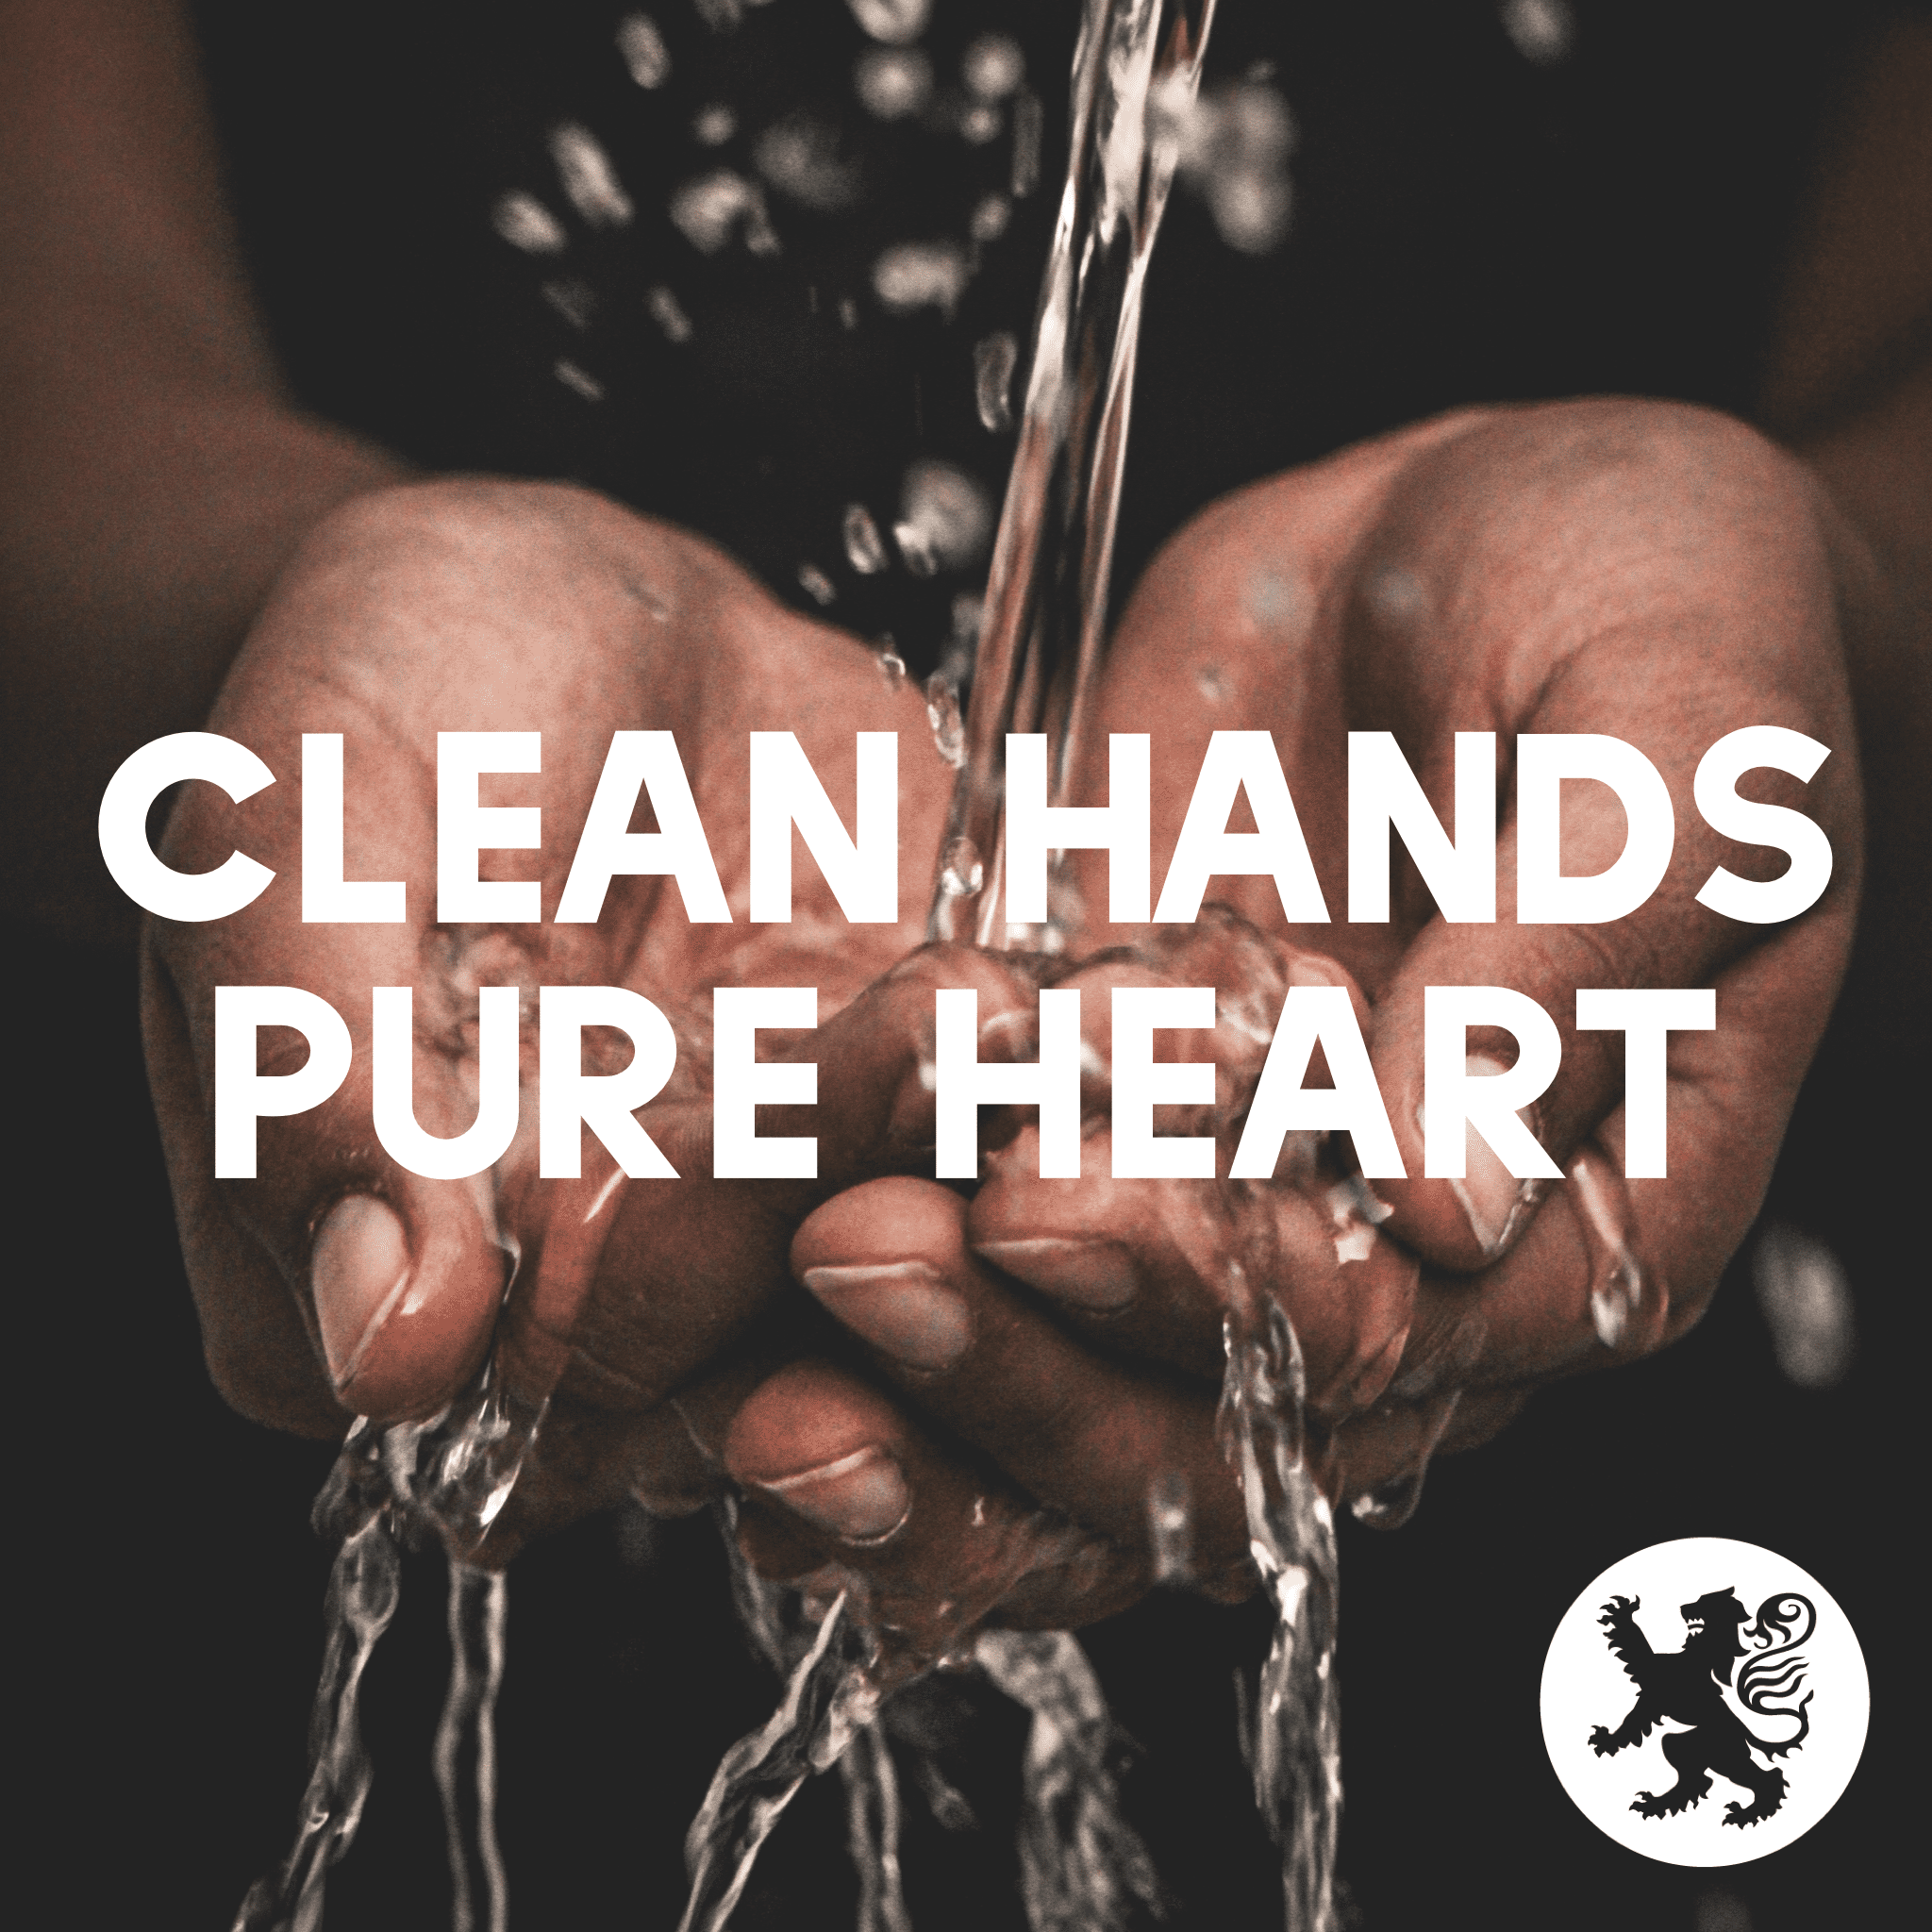 chris tomlin clean hands pure heart